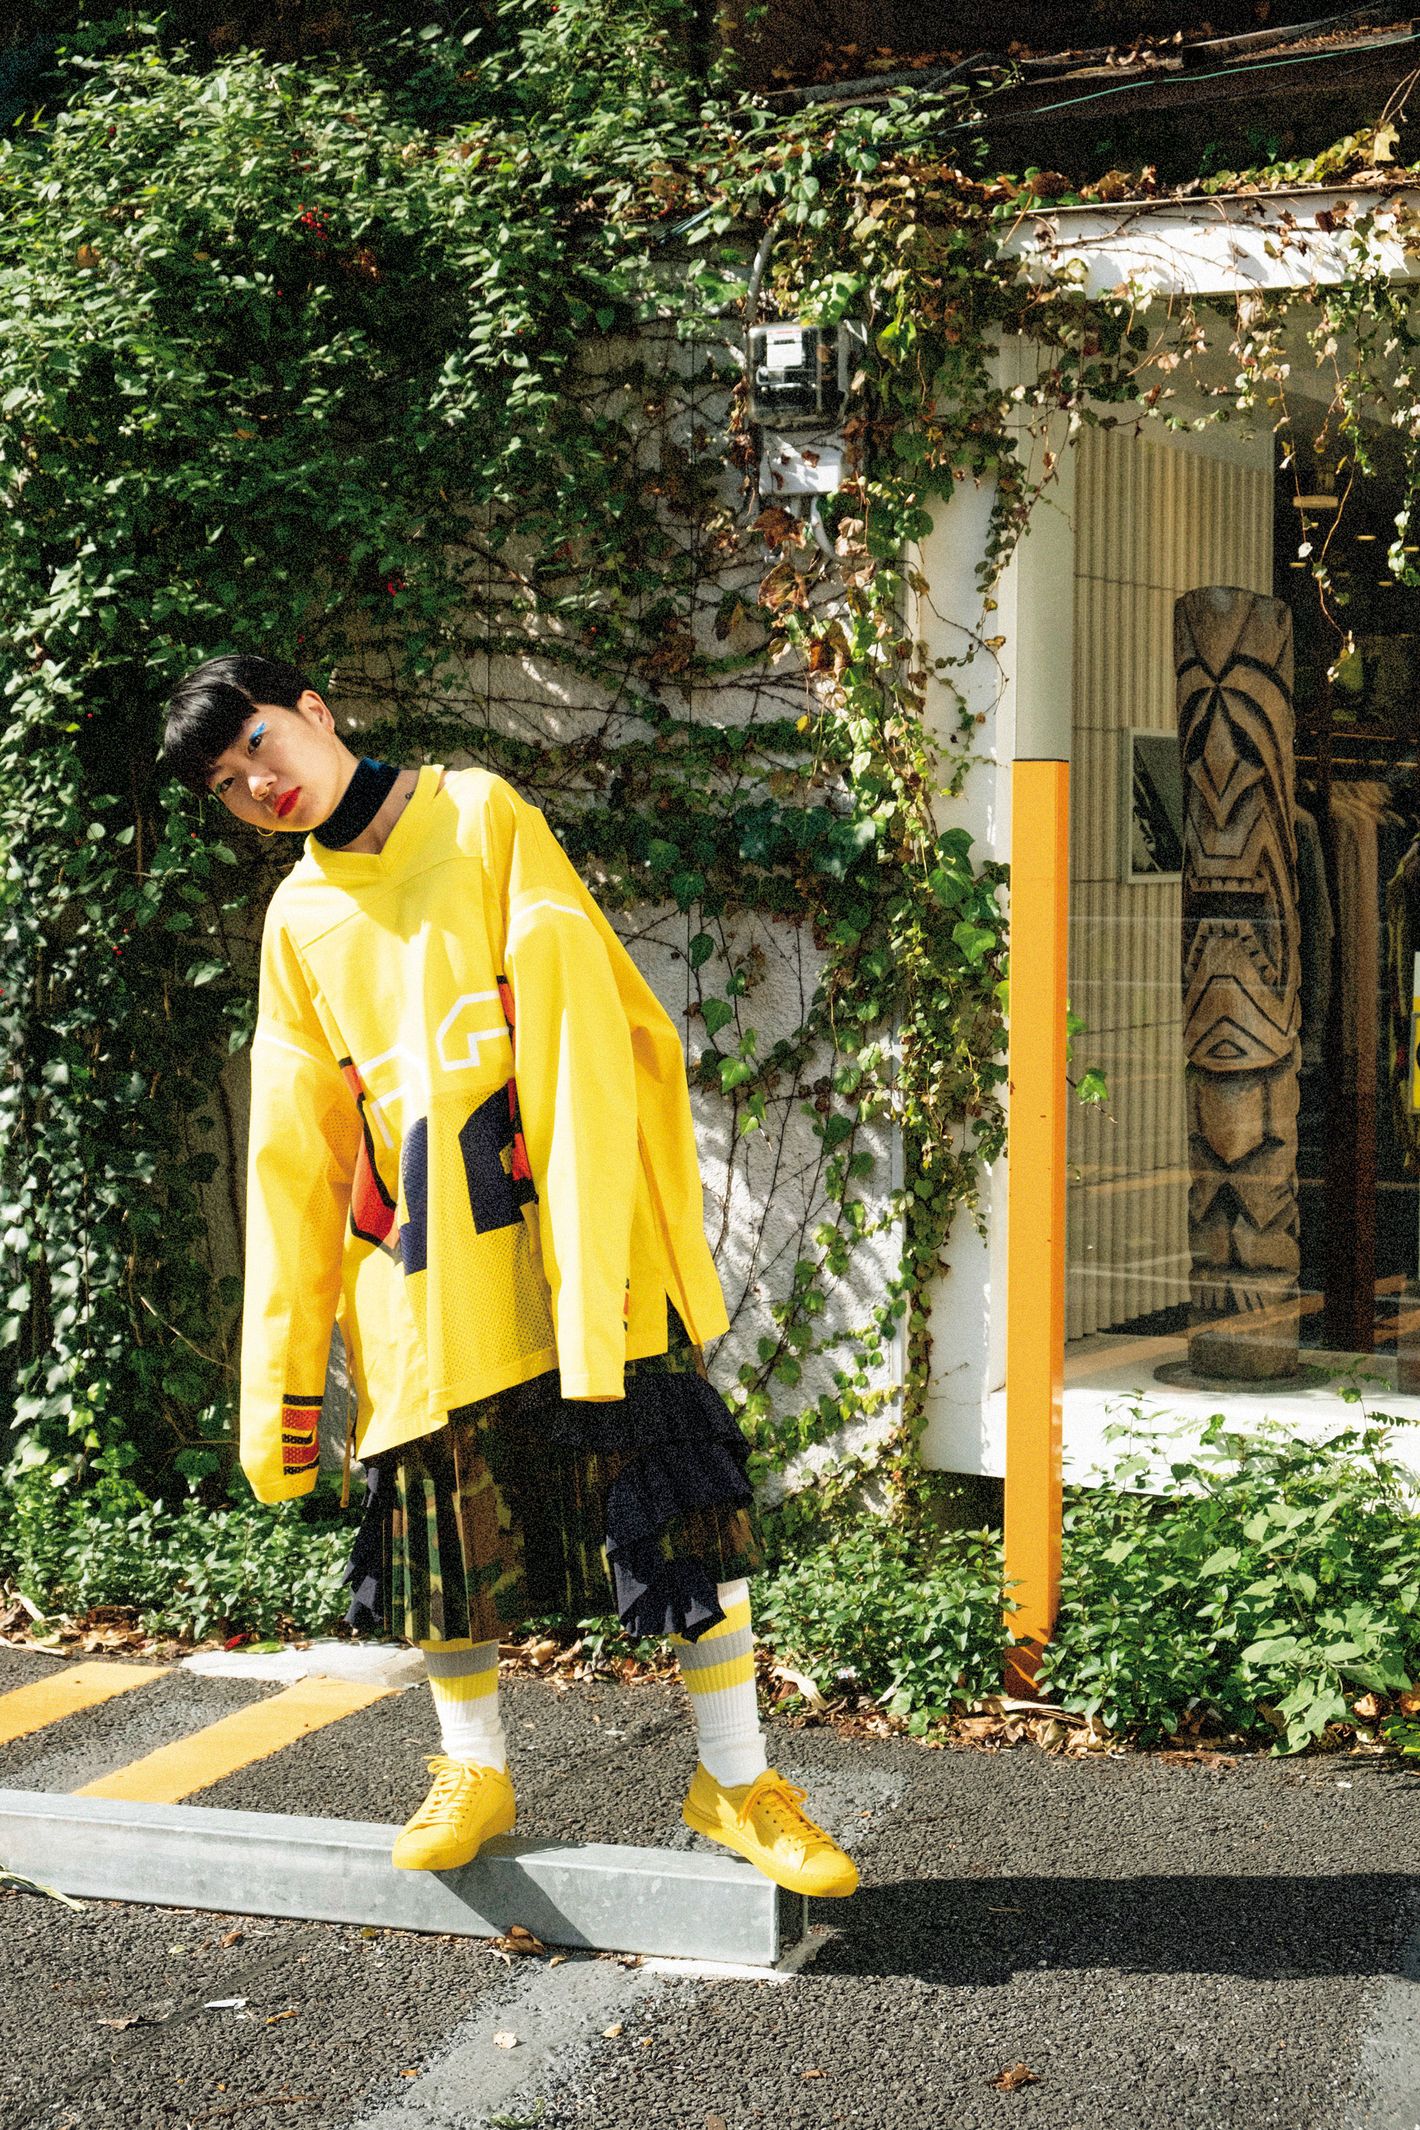 Beyond Harajuku: On Tokyo's Fashion Landscape Now